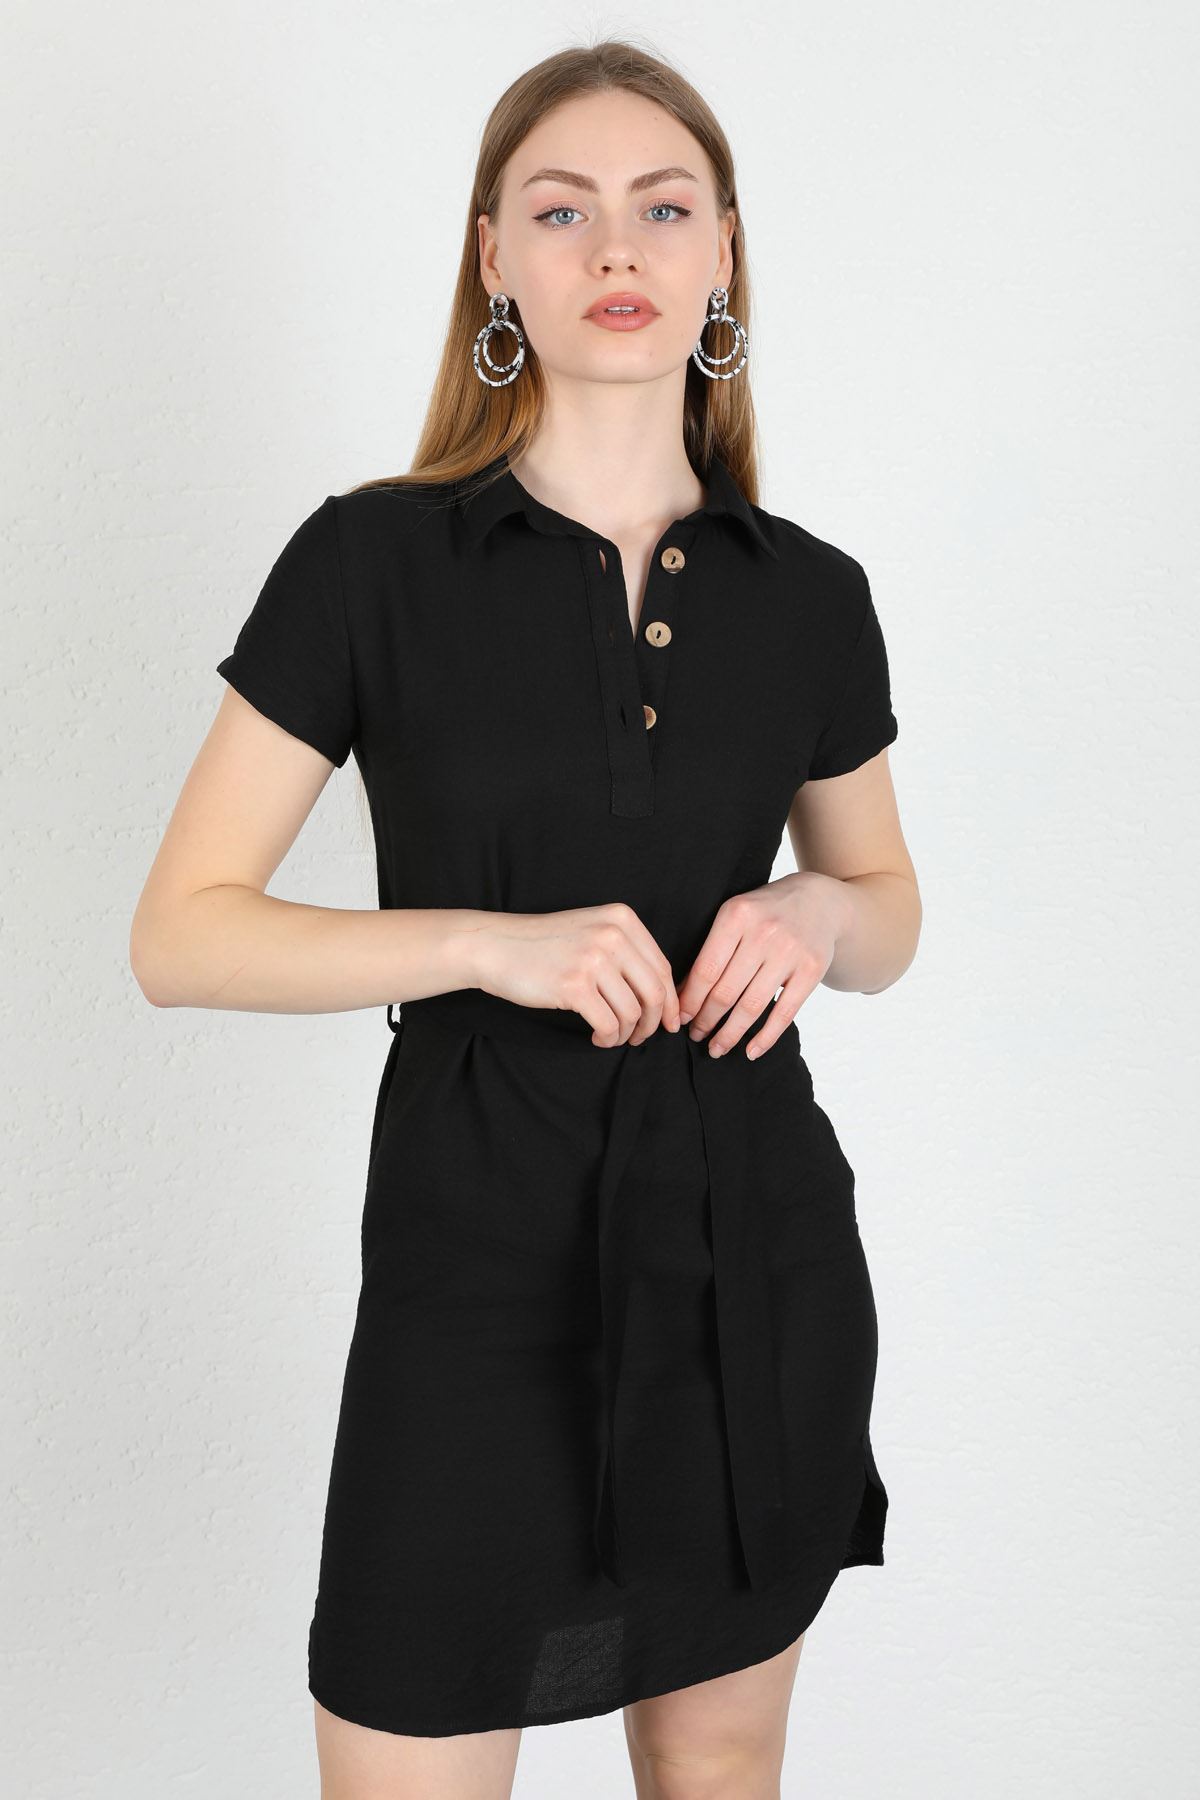 Submersible Fabric Shirt Collar Full Fit Buttoned Women Dress - Black